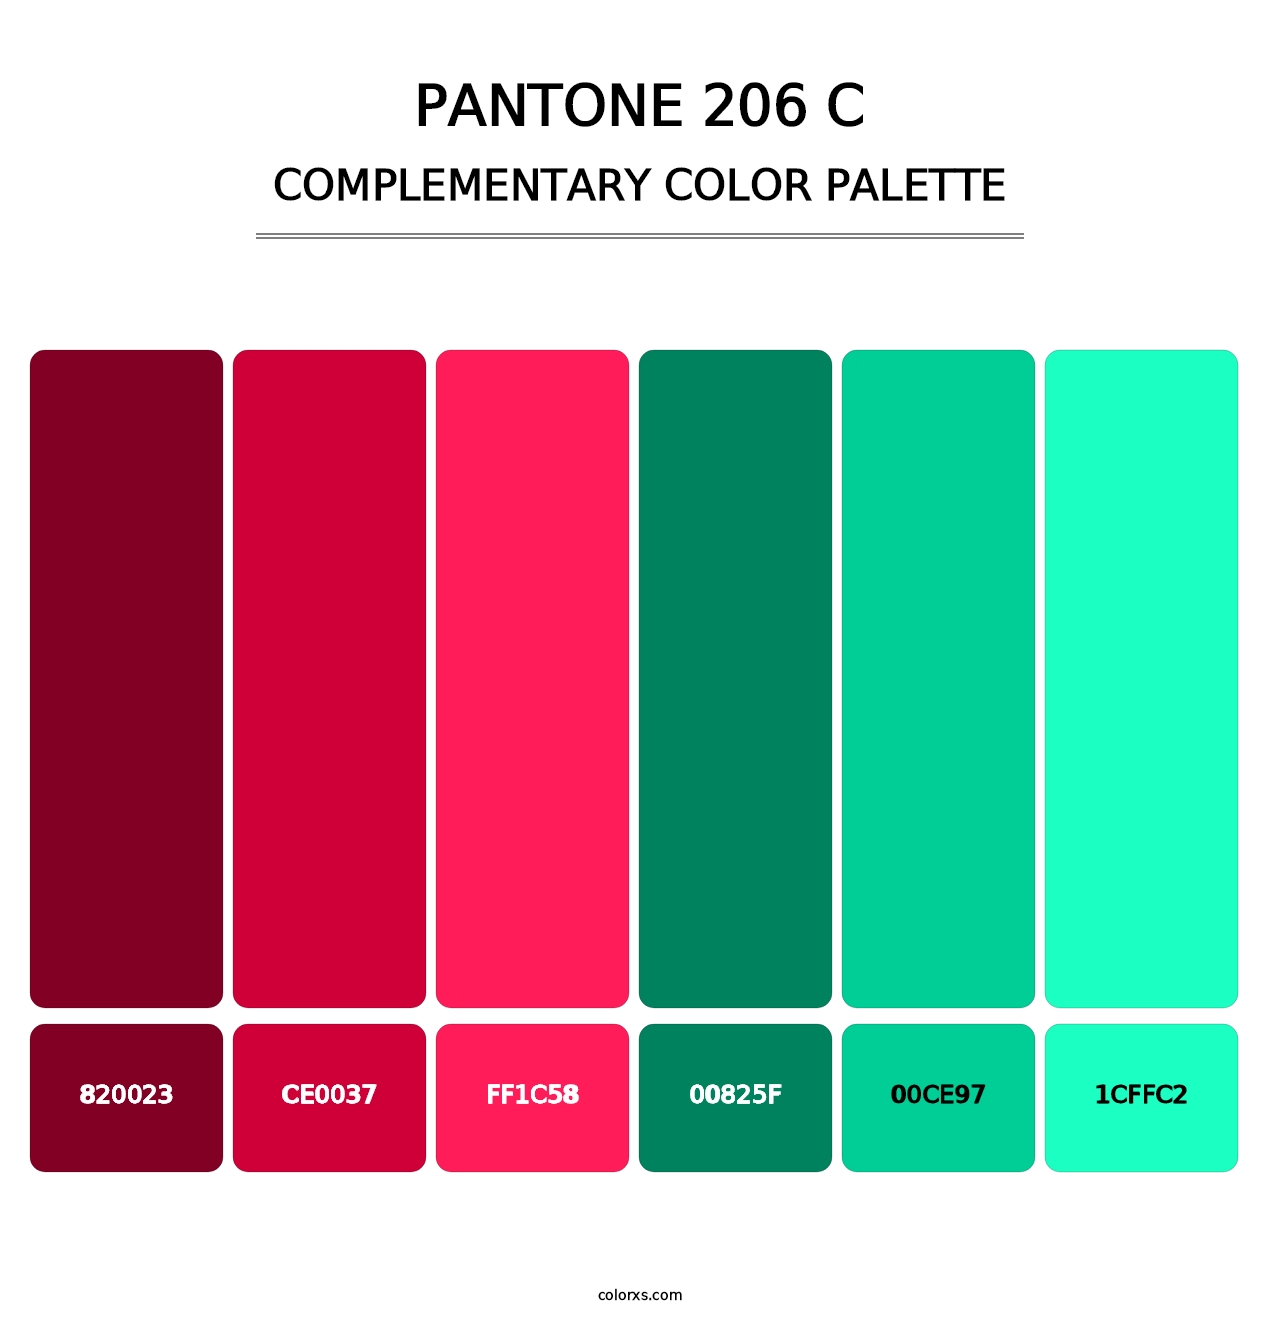 PANTONE 206 C - Complementary Color Palette